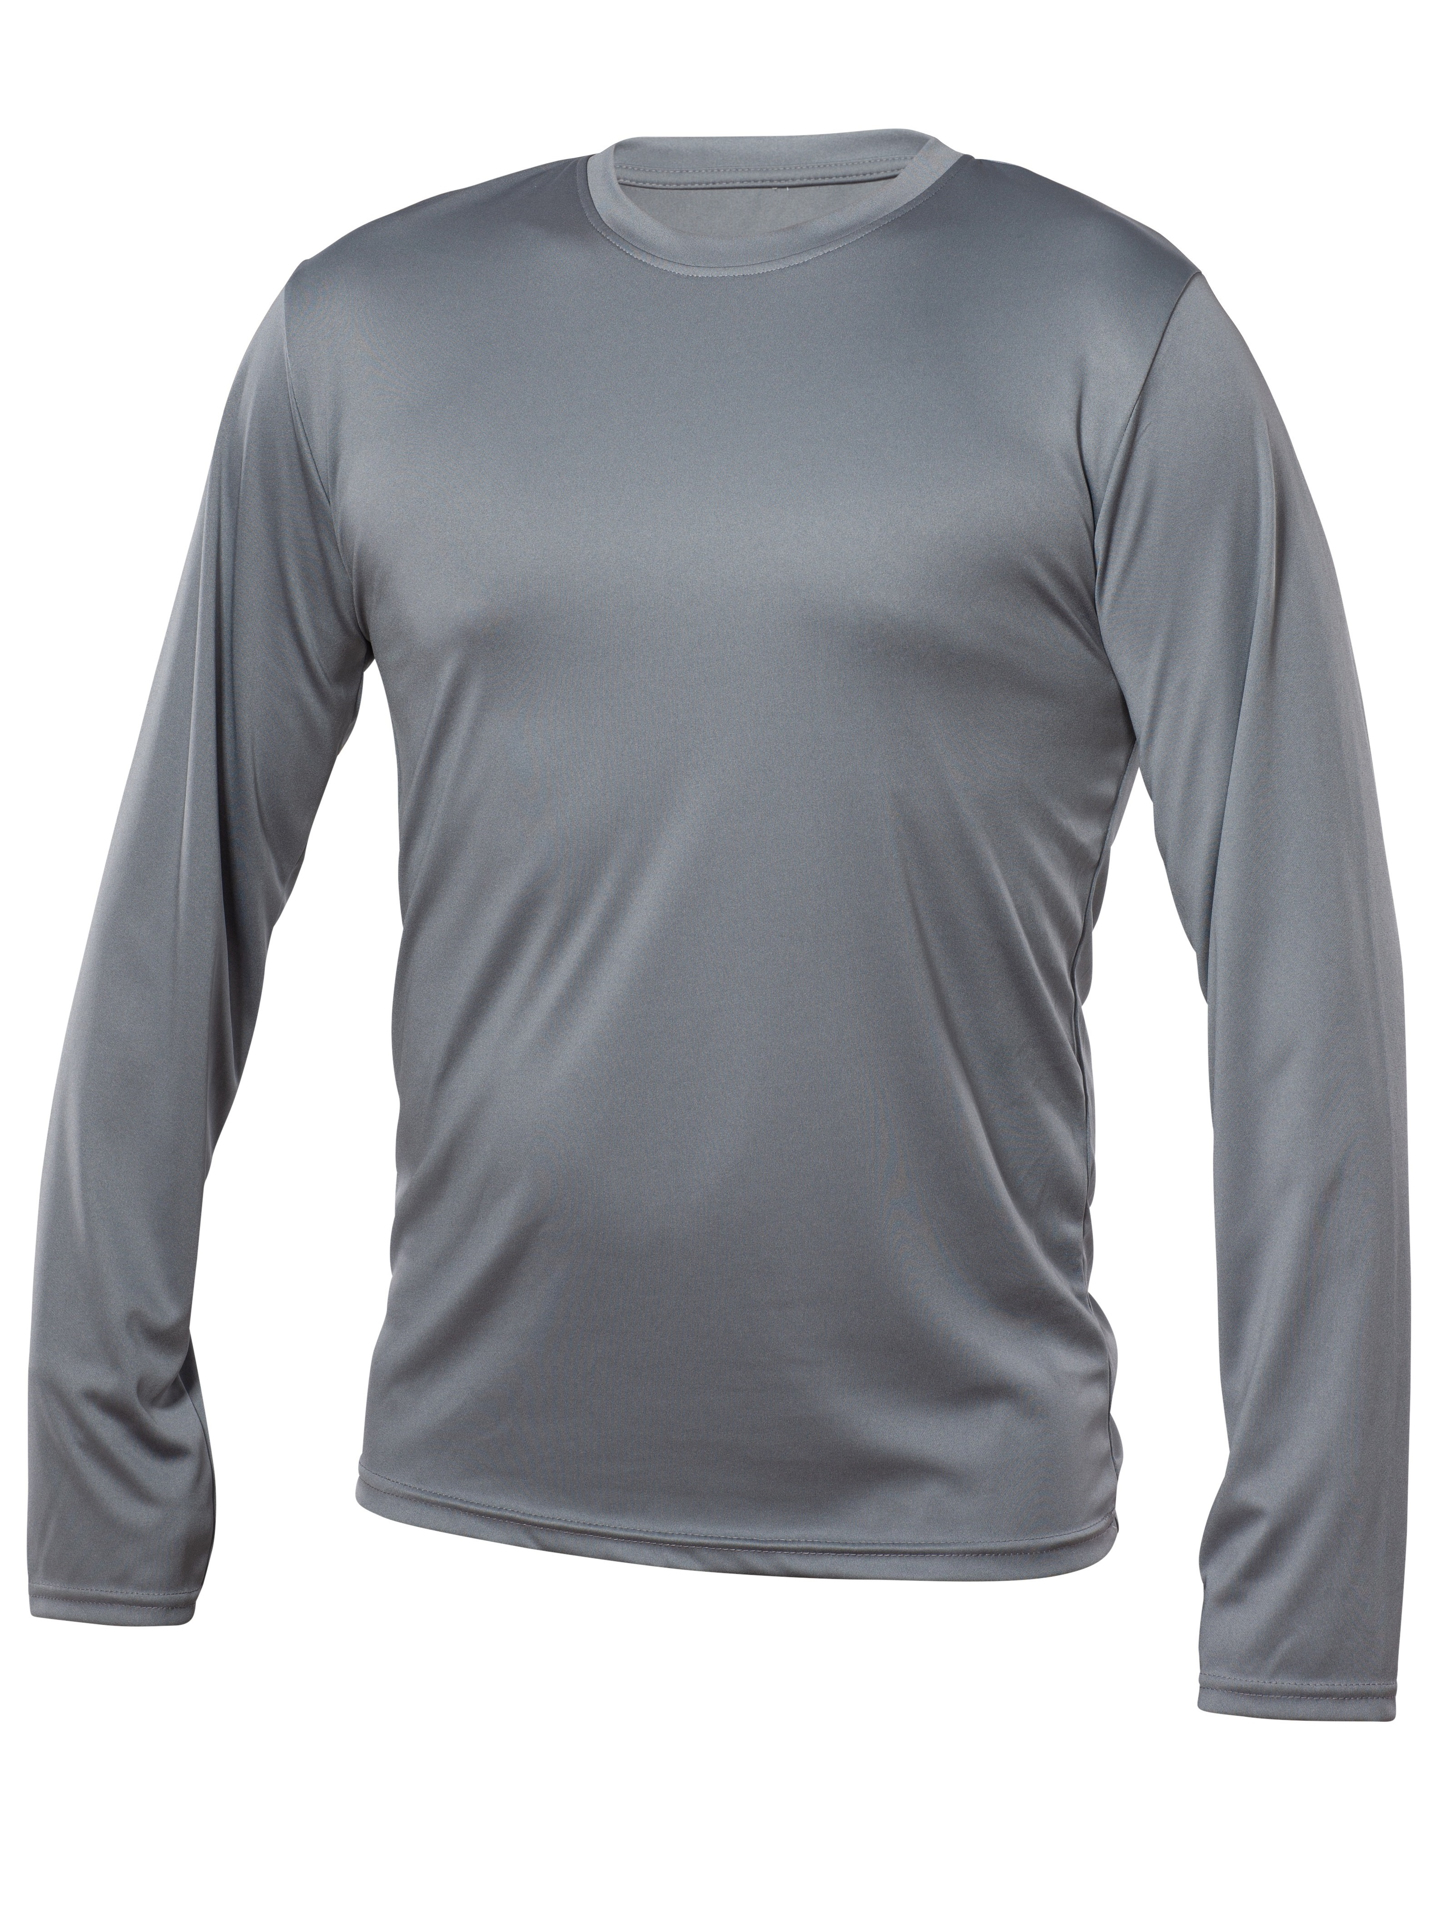 Blankactivewear t-shirt performance active wear vêtement blank – www ...